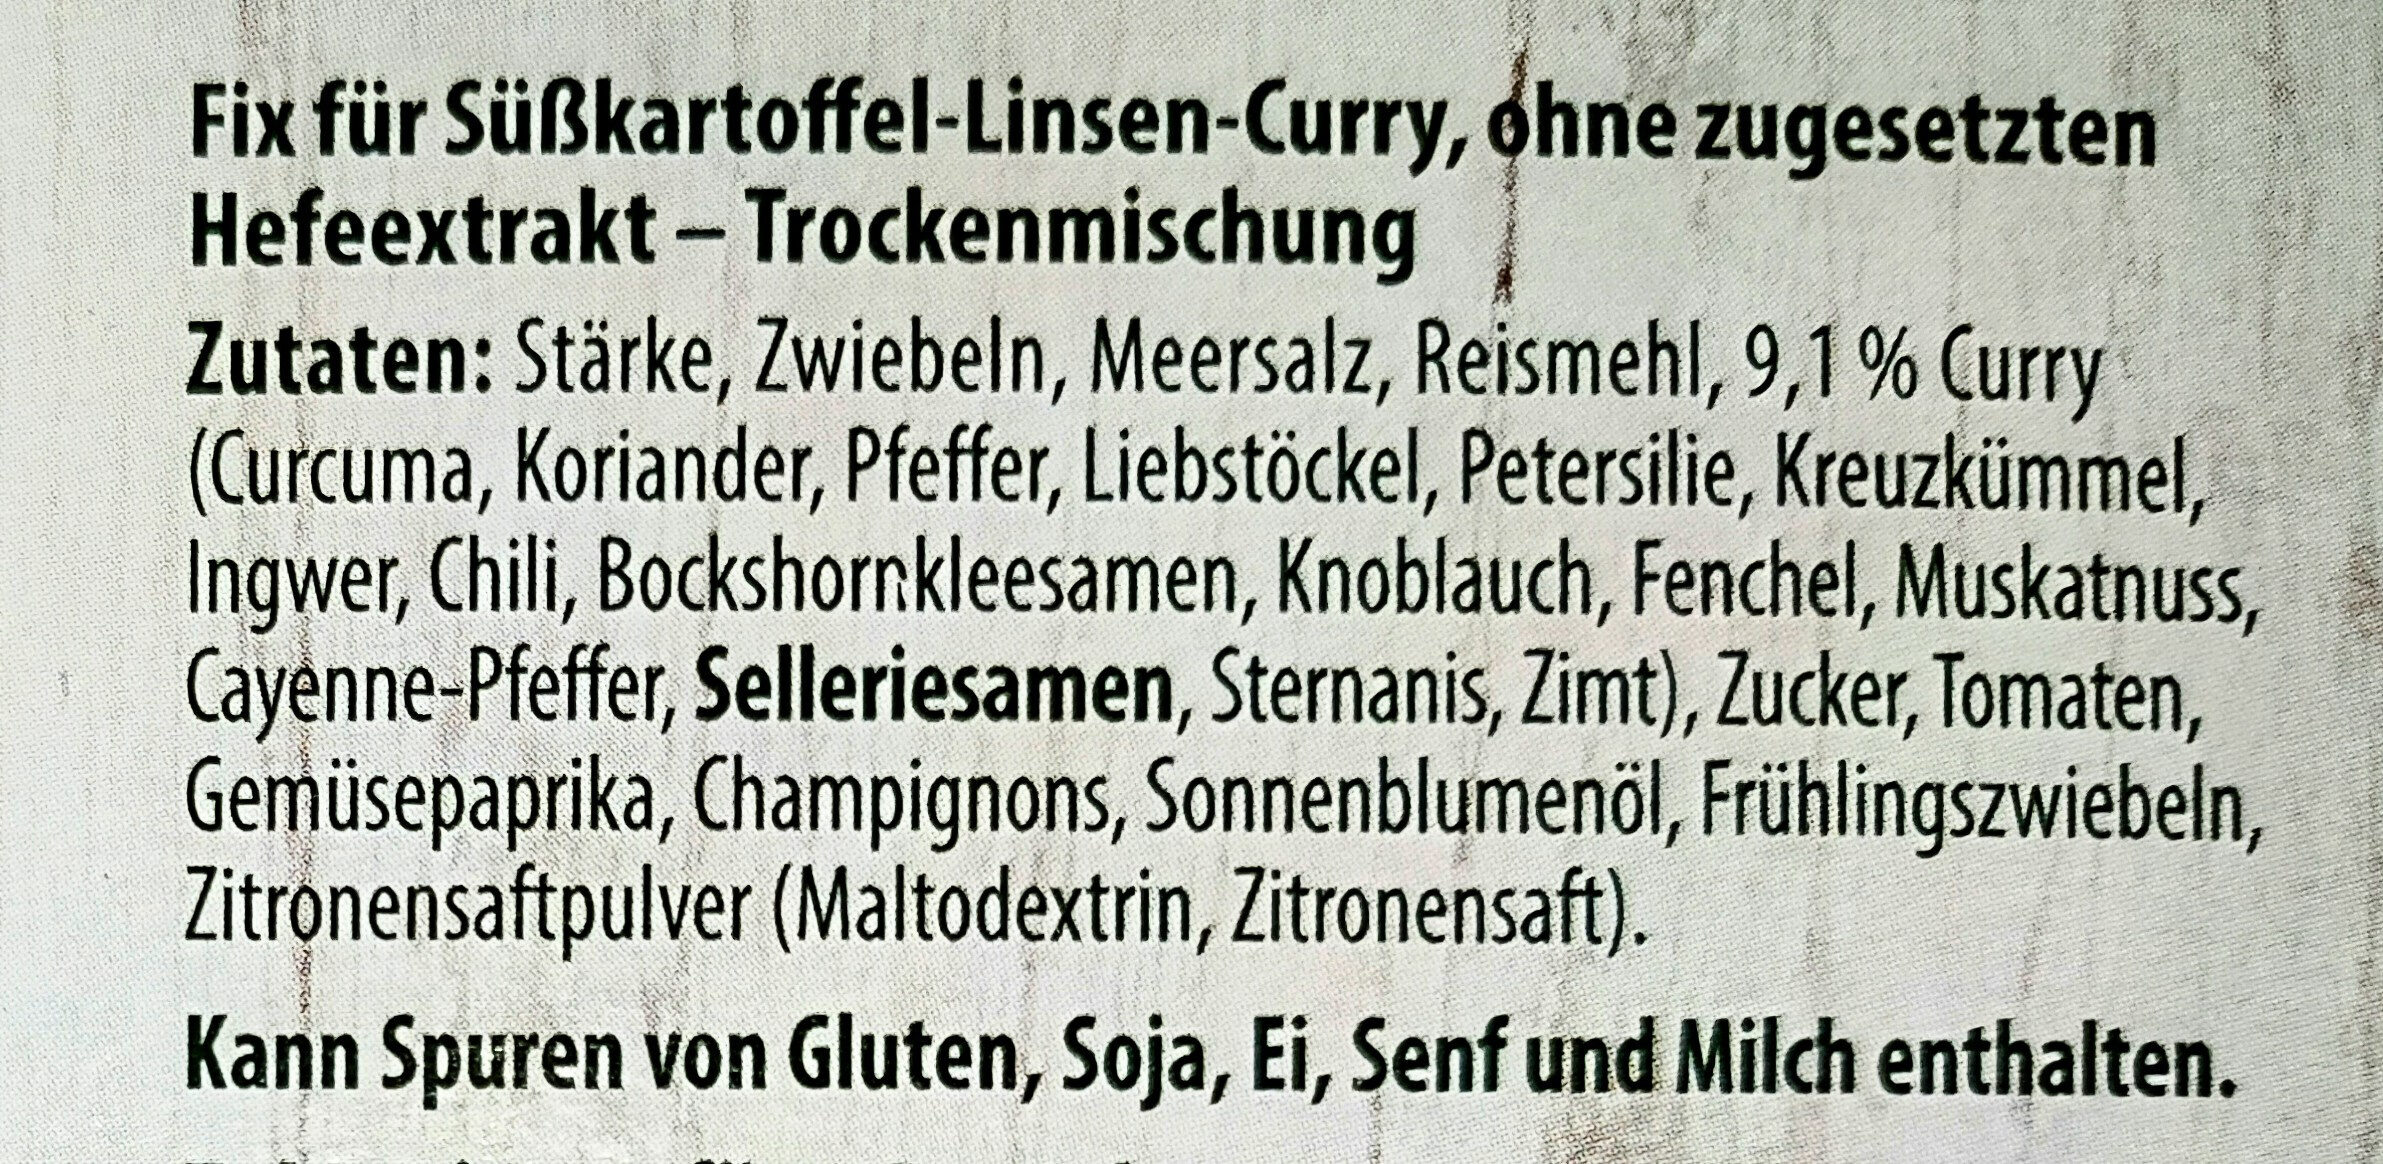 Süßkartoffel-Linsen-Curry - Ingredients - de